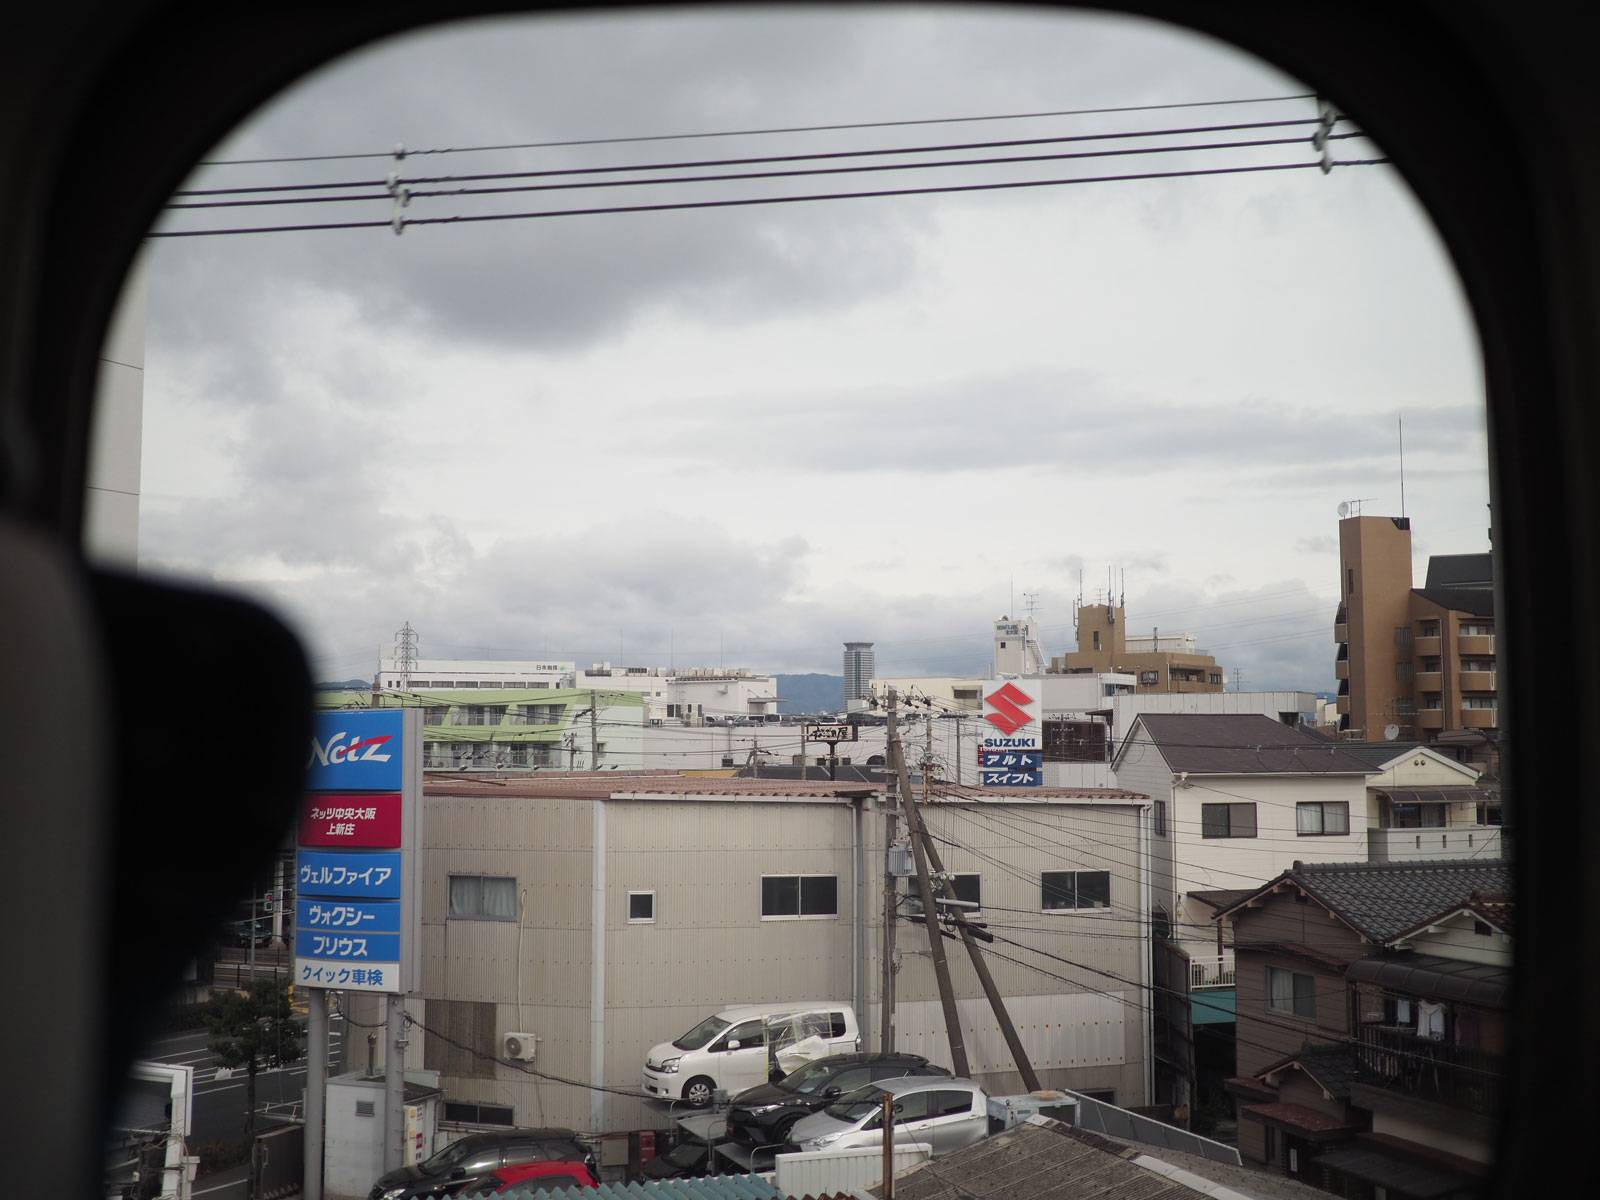 Outside the Shinkansen window